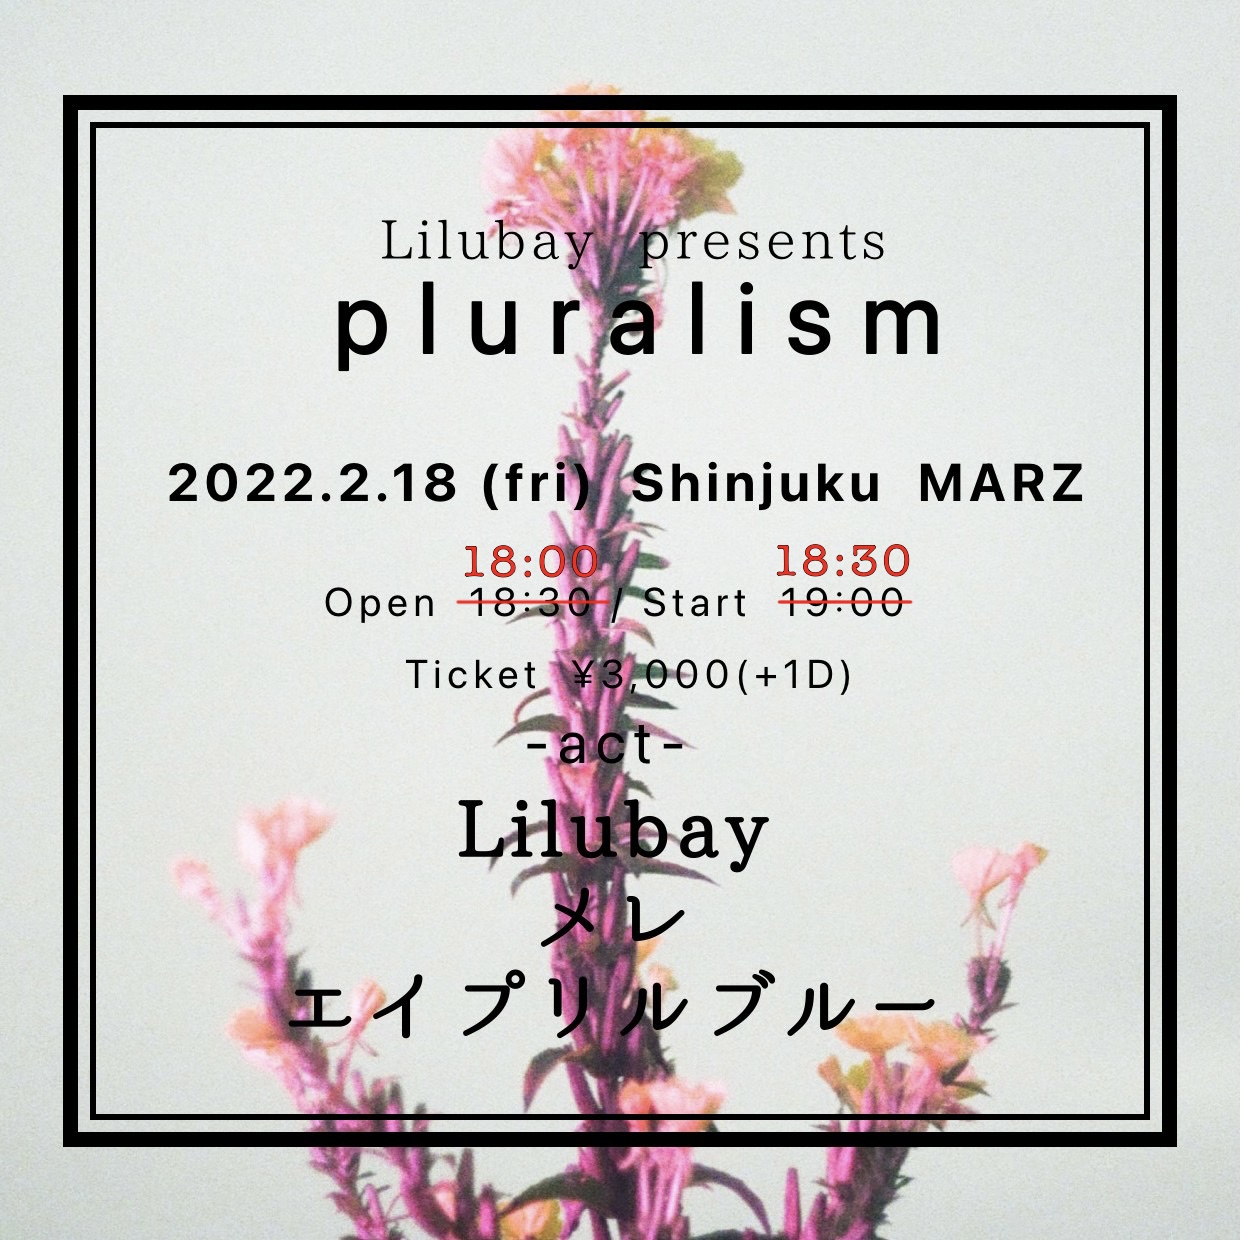 Lilubay presents “pluralism”